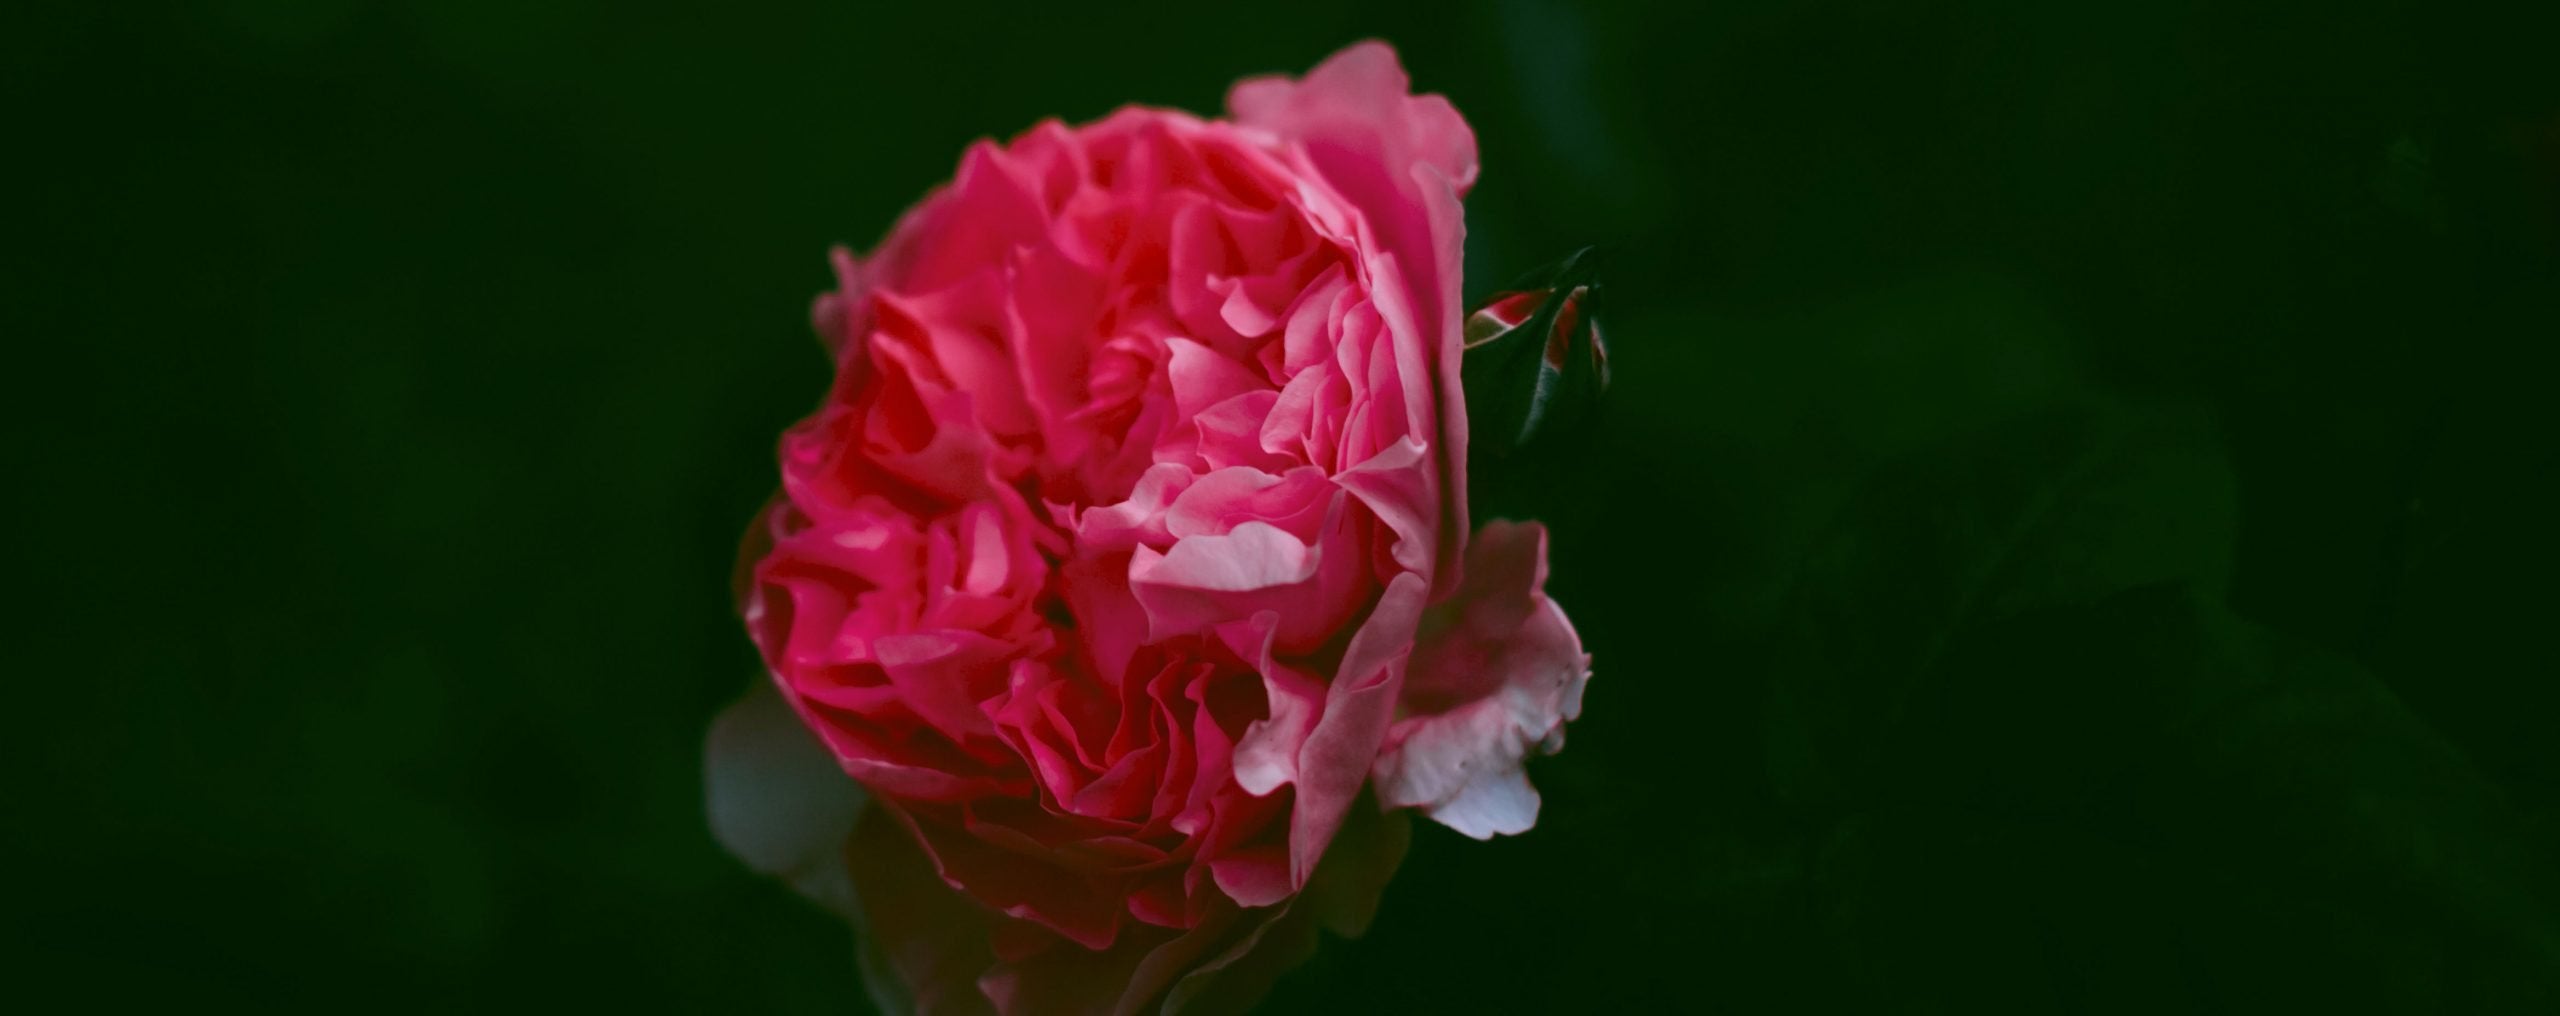 A pink rose on a dark background.